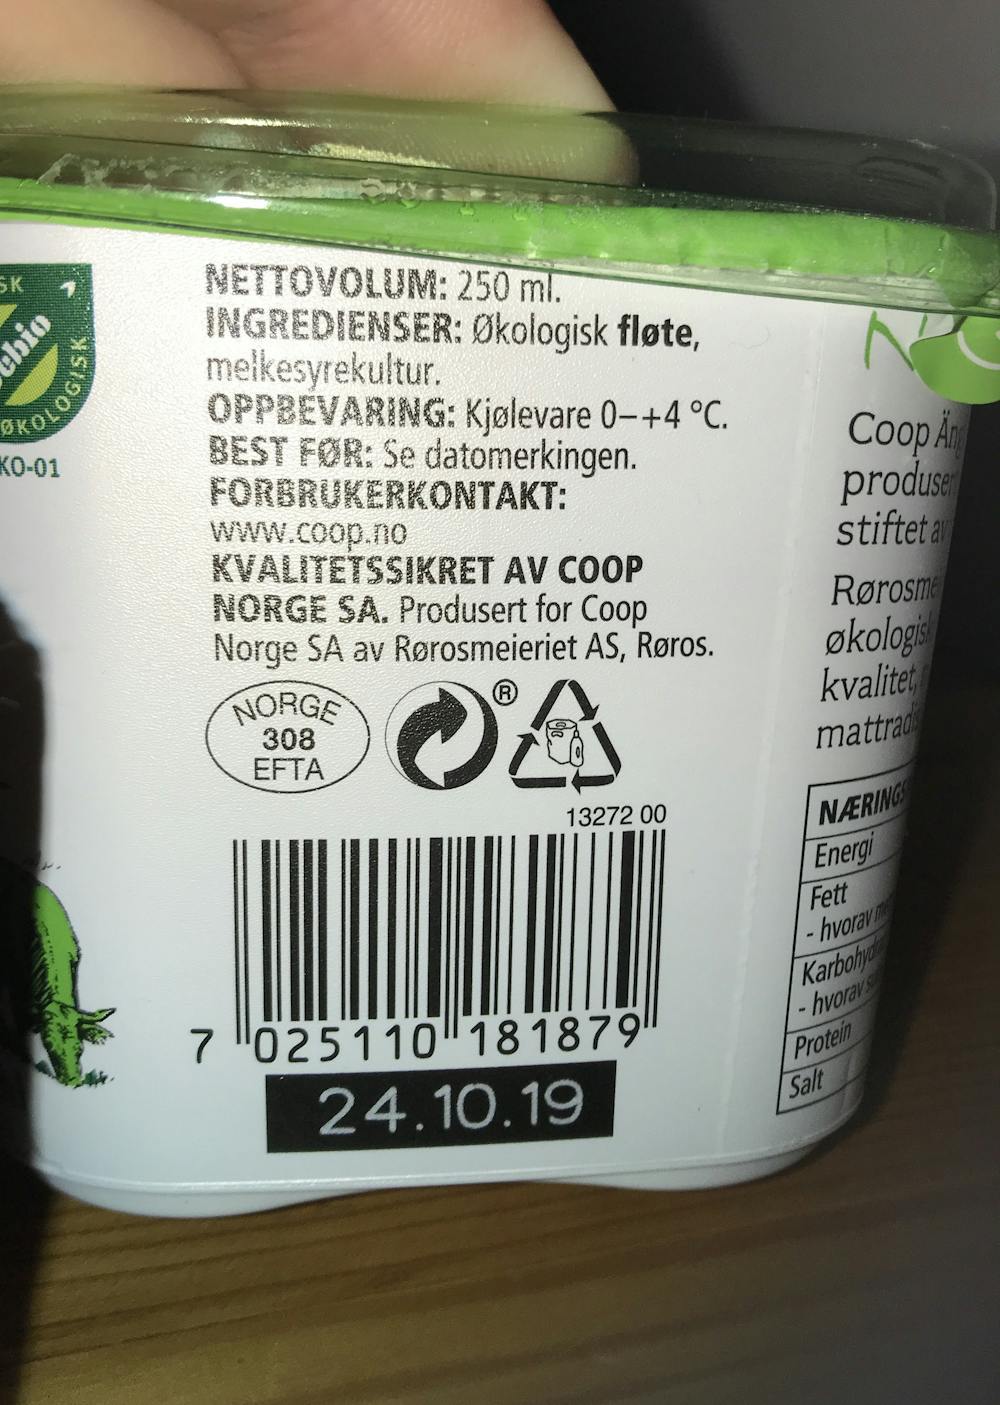 Ingredienslisten til Coop änglamark Økologisk lettrømme rørosmeieriet